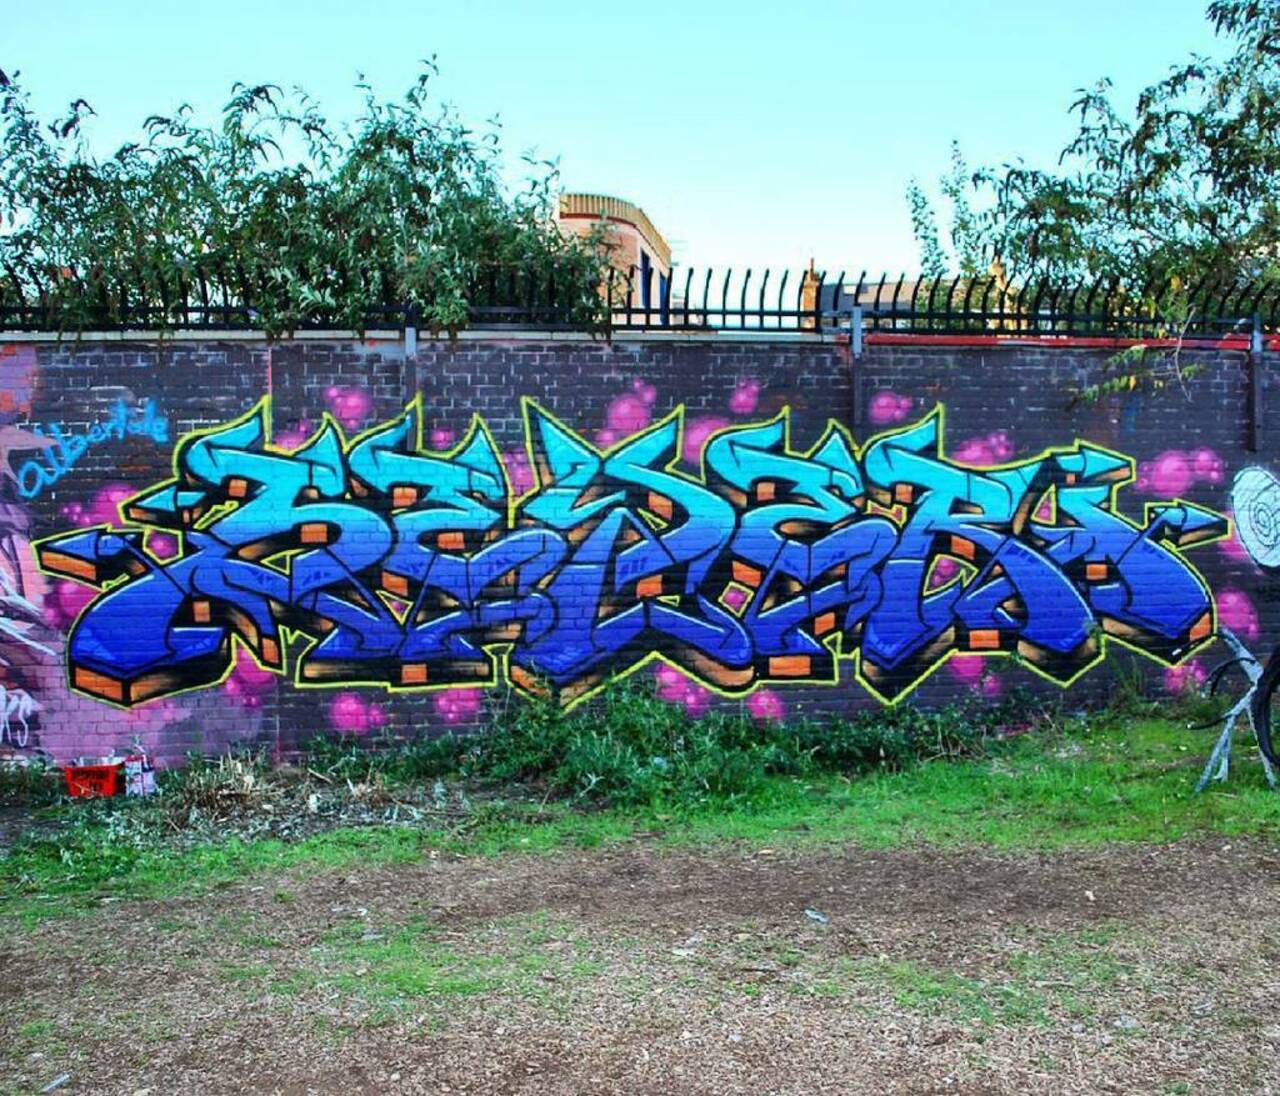 Graffiti art  
#Graffiti #StreetArt #UrbanArt #WhoDidThis #NomadicCommunityGarden #BrickLane #Shoreditch #London #… http://t.co/UxYlQWKDnh